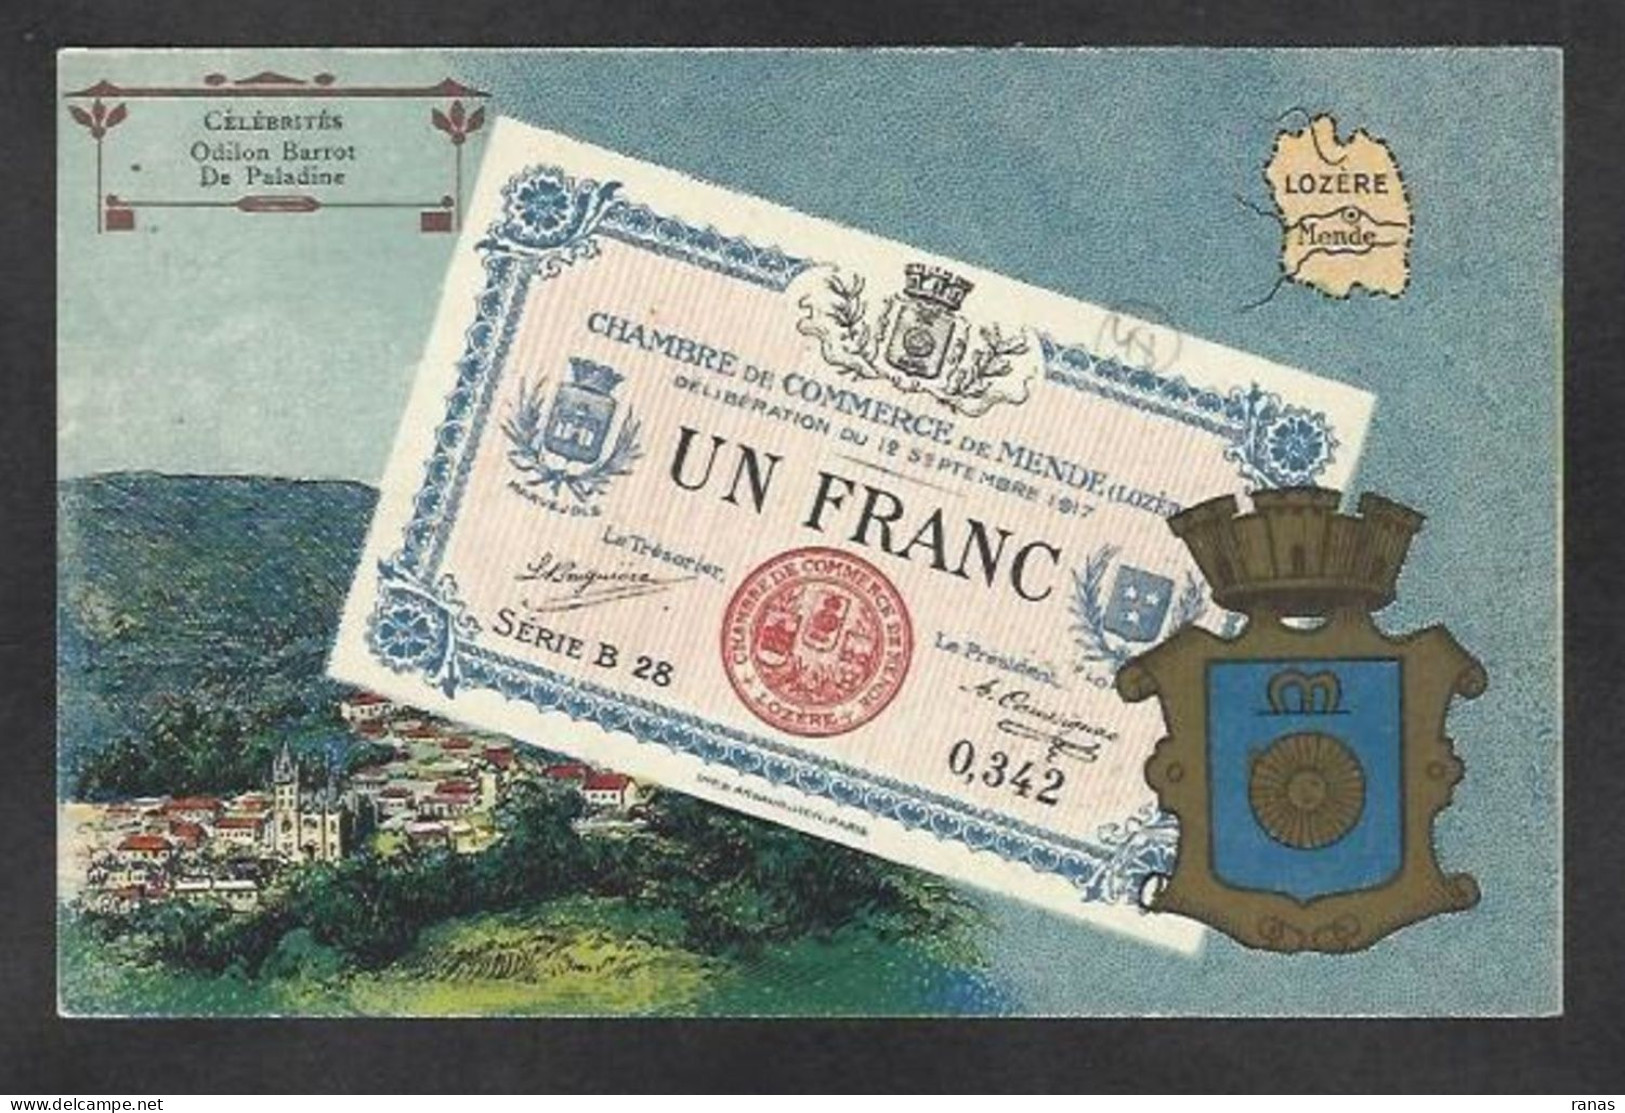 CPA Billet De Banque Banknote Non Circulé Lozère 48 Billet De Necessité - Münzen (Abb.)